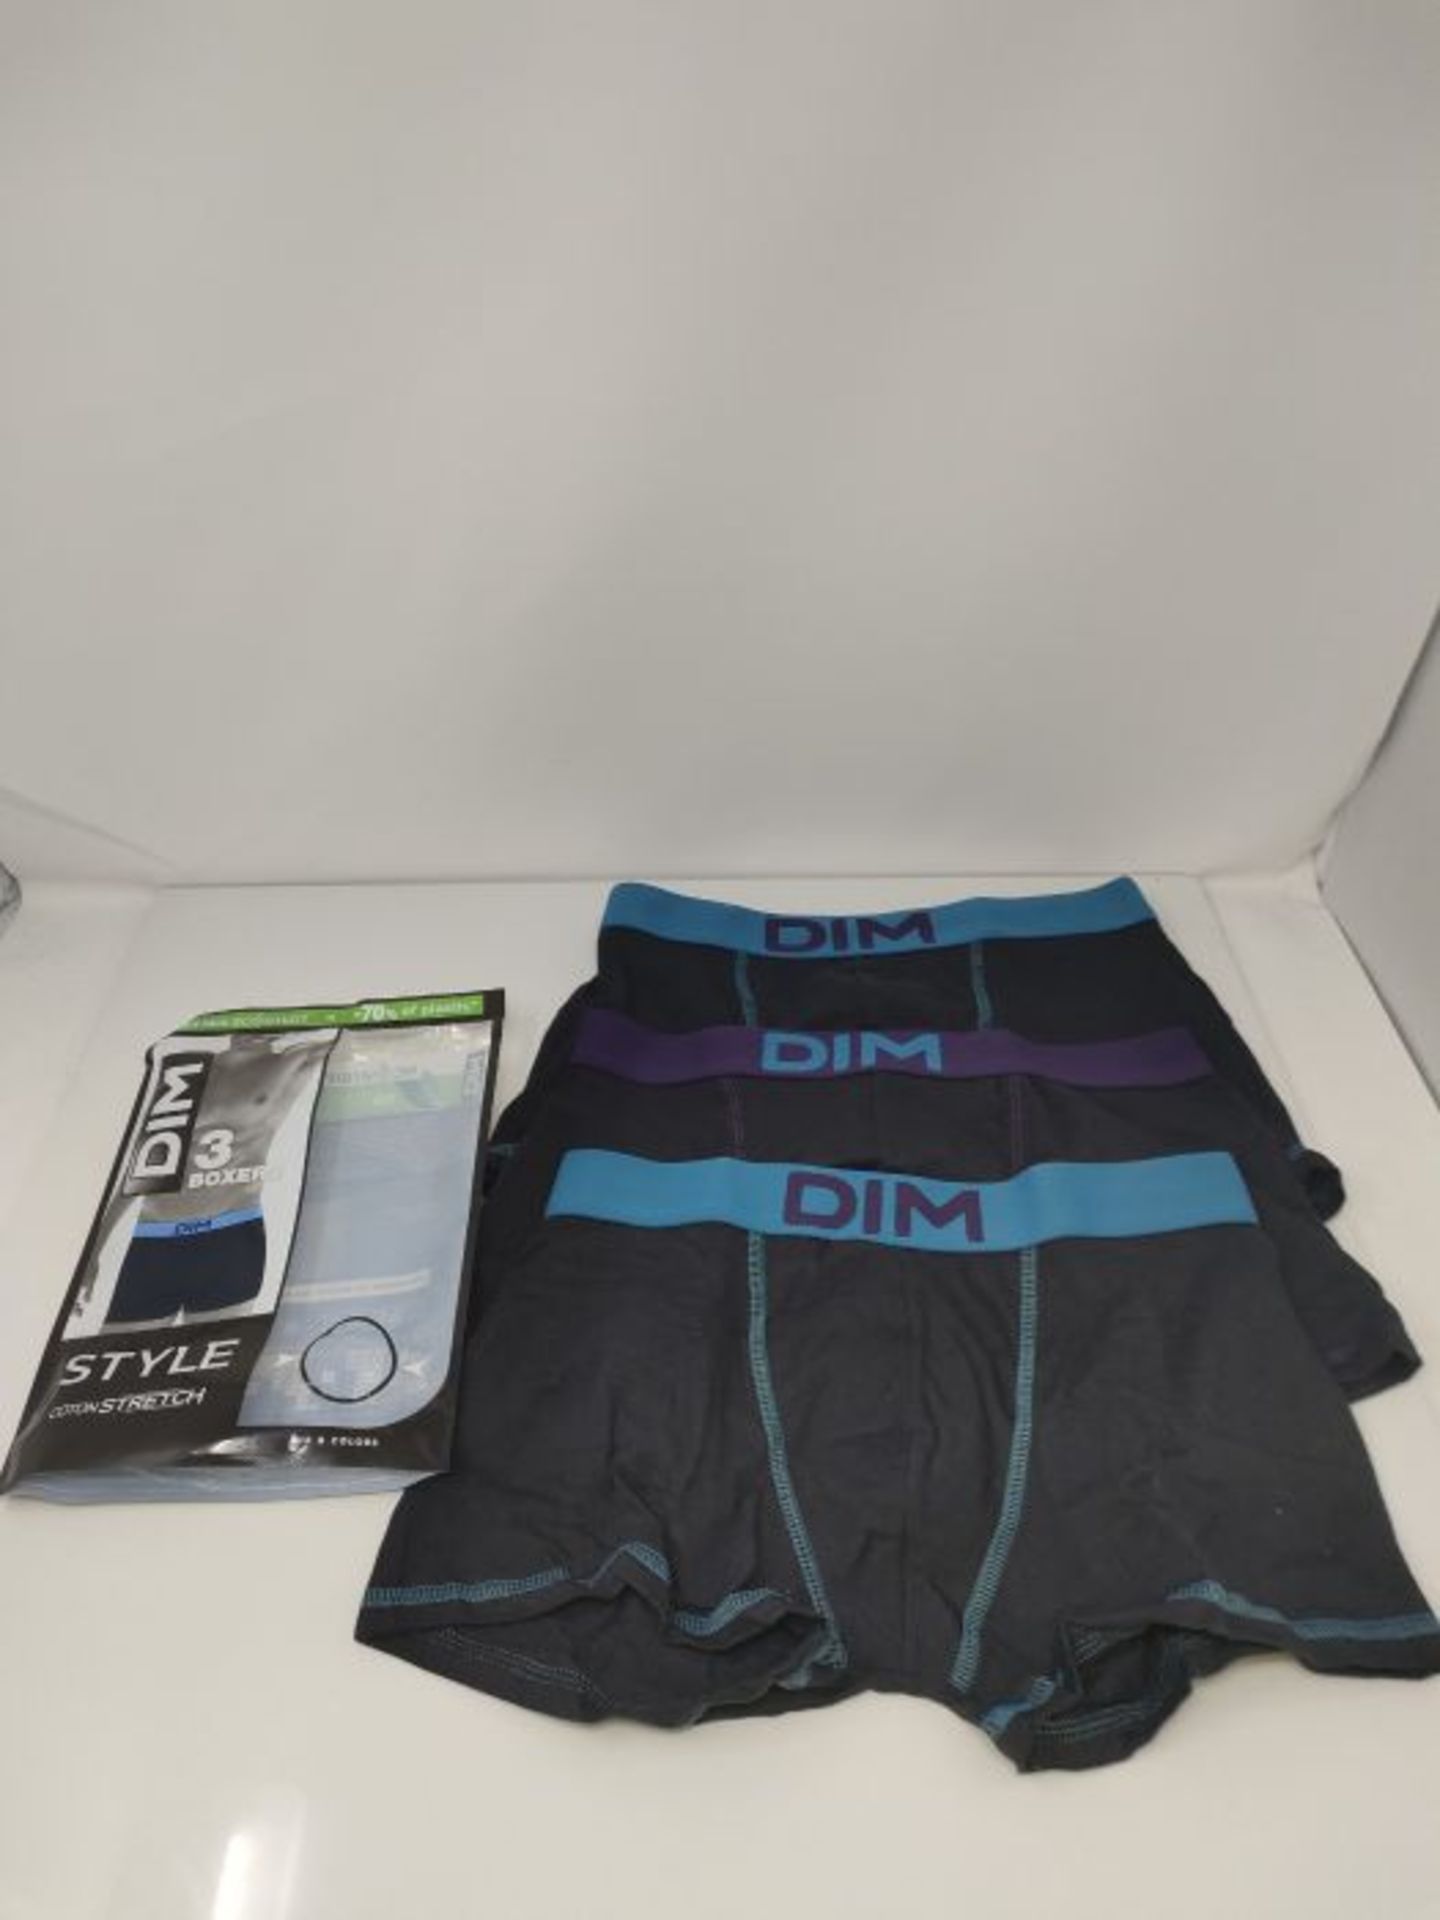 DIM Men's Boxer Briefs (Pack of 3) - Image 2 of 3